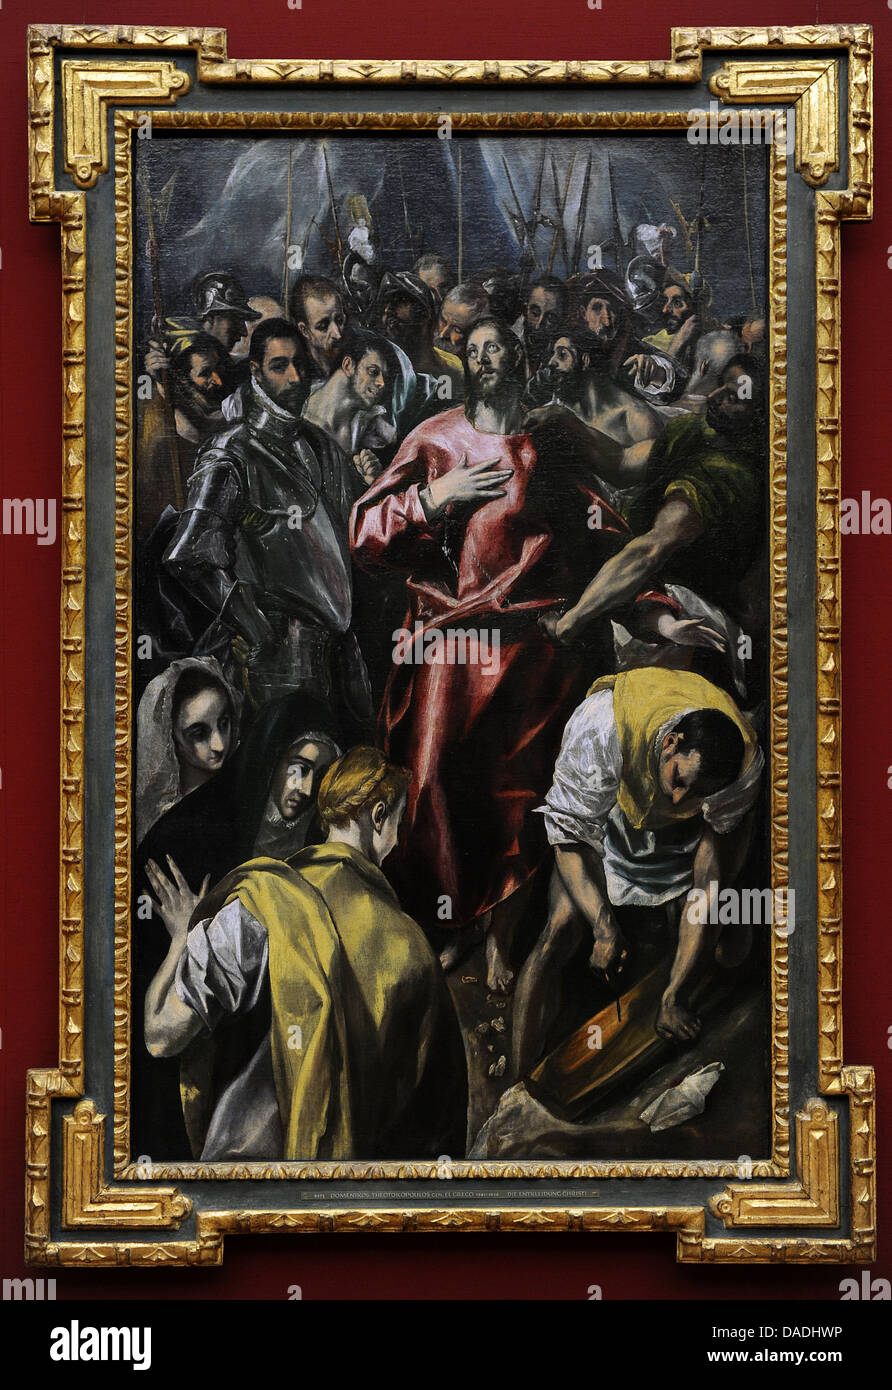 El Greco (Domenikos Theotokopoulos) (1541-1614). Spanischer Maler. Das Entkleiden des Christus, ca. 1606-1608. Stockfoto